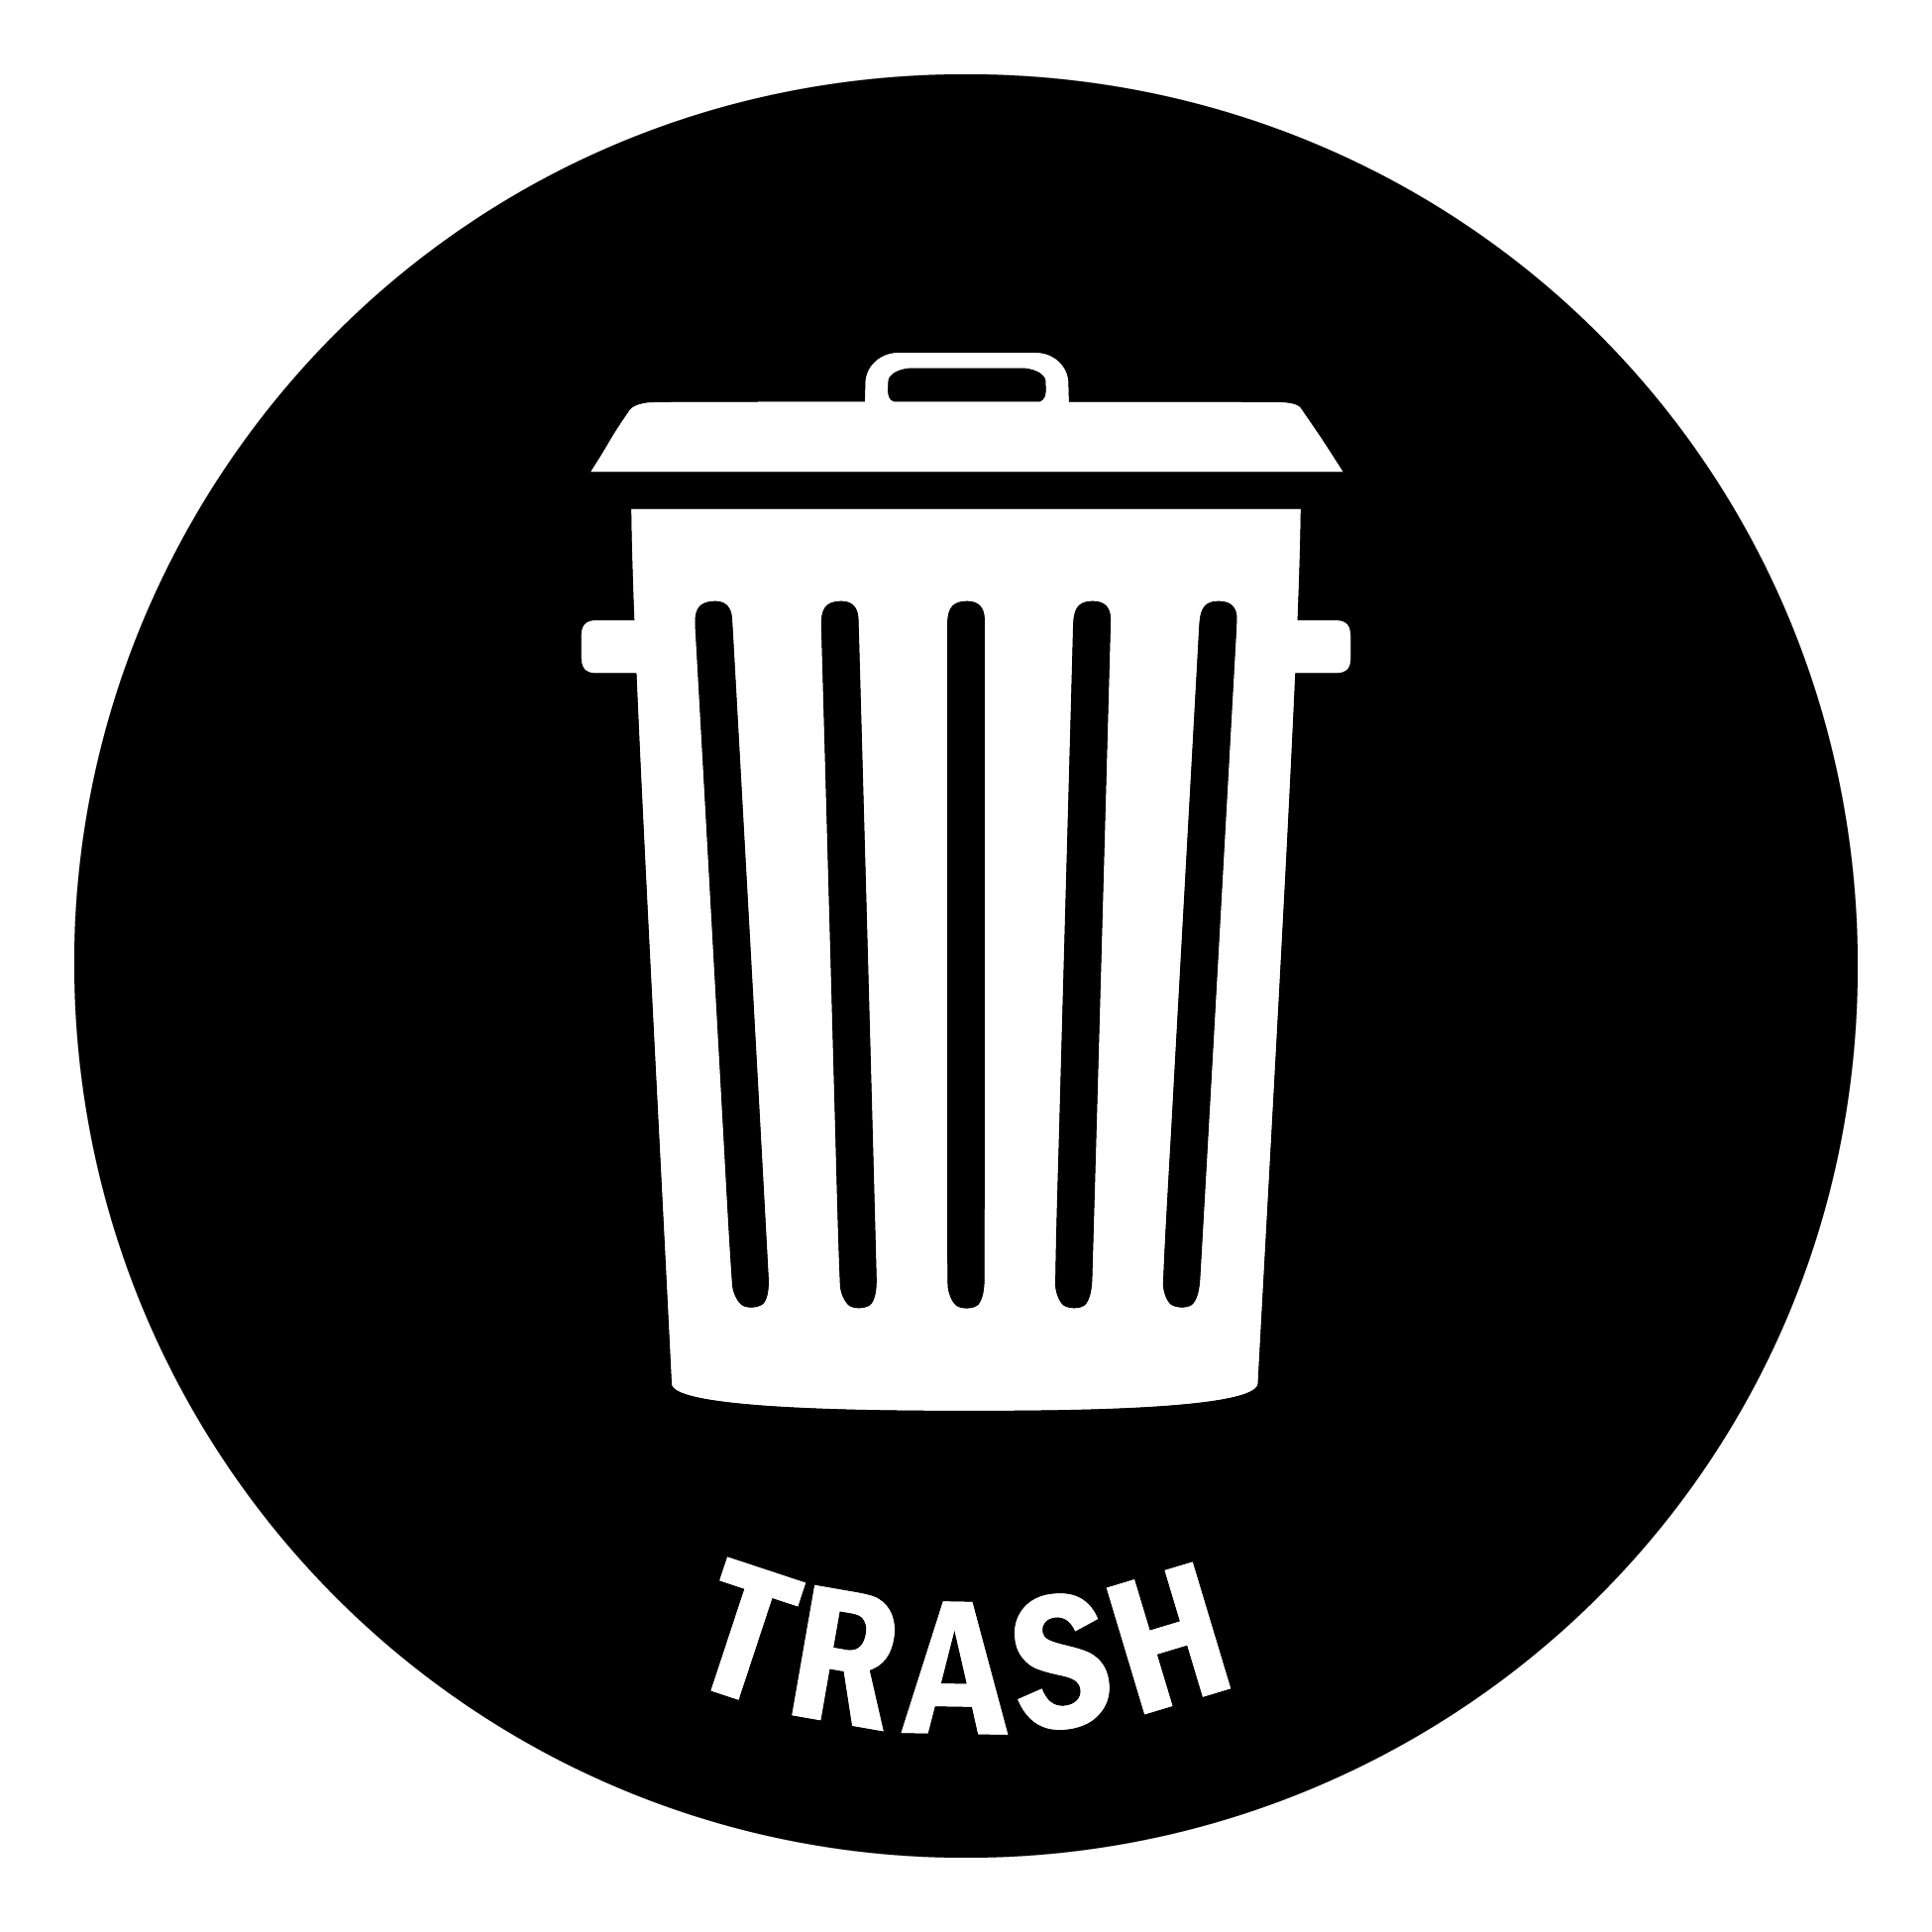 trash-sign-promoting-proper-waste-management-and-environmental